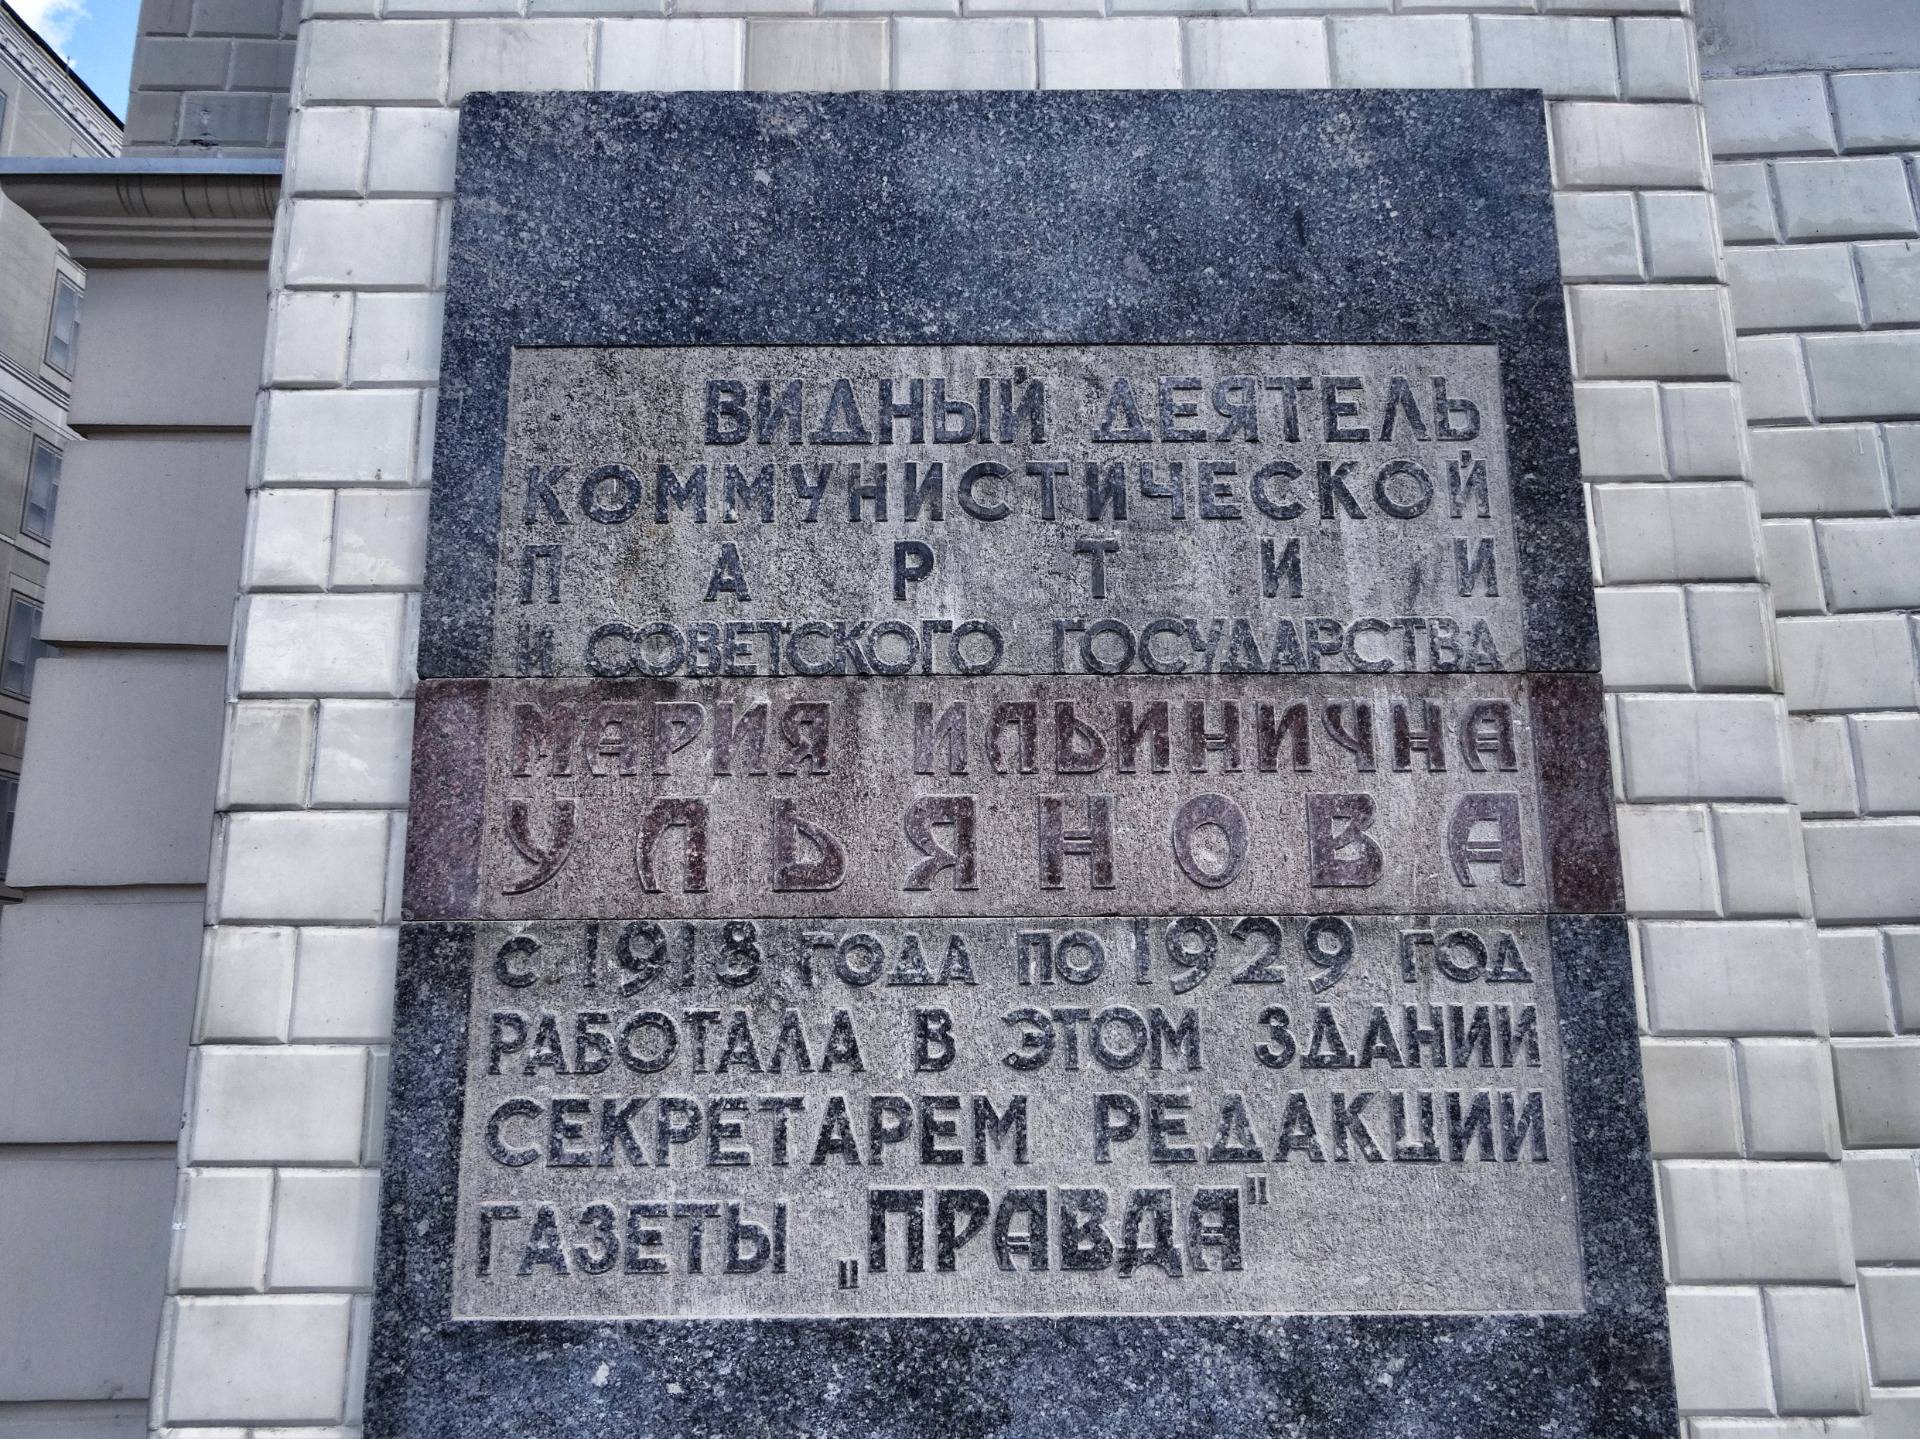 A rememberance plate for the communistb newspaper ”Pravda” (”Truth”)